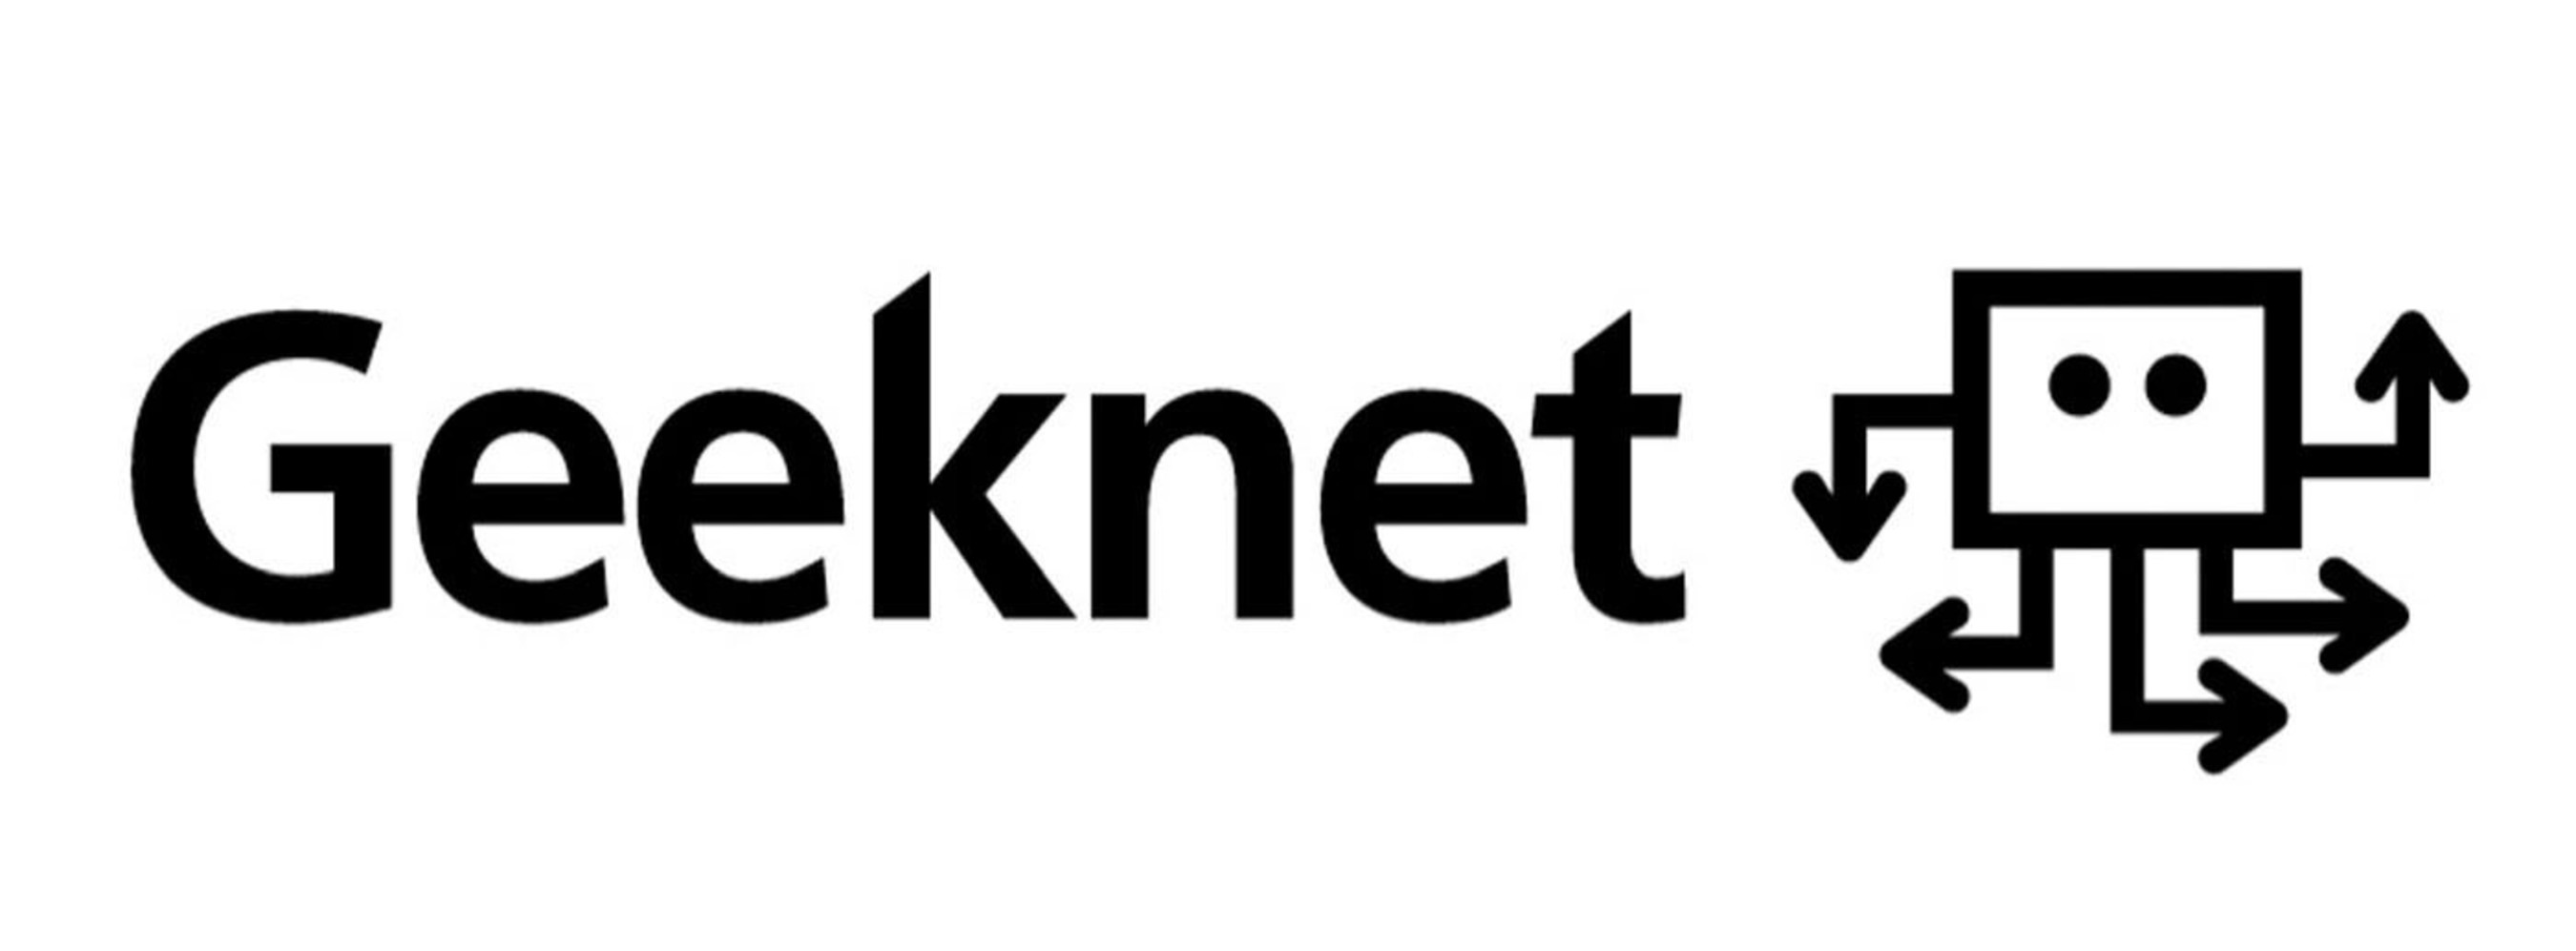 Geeknet, Inc. logo.